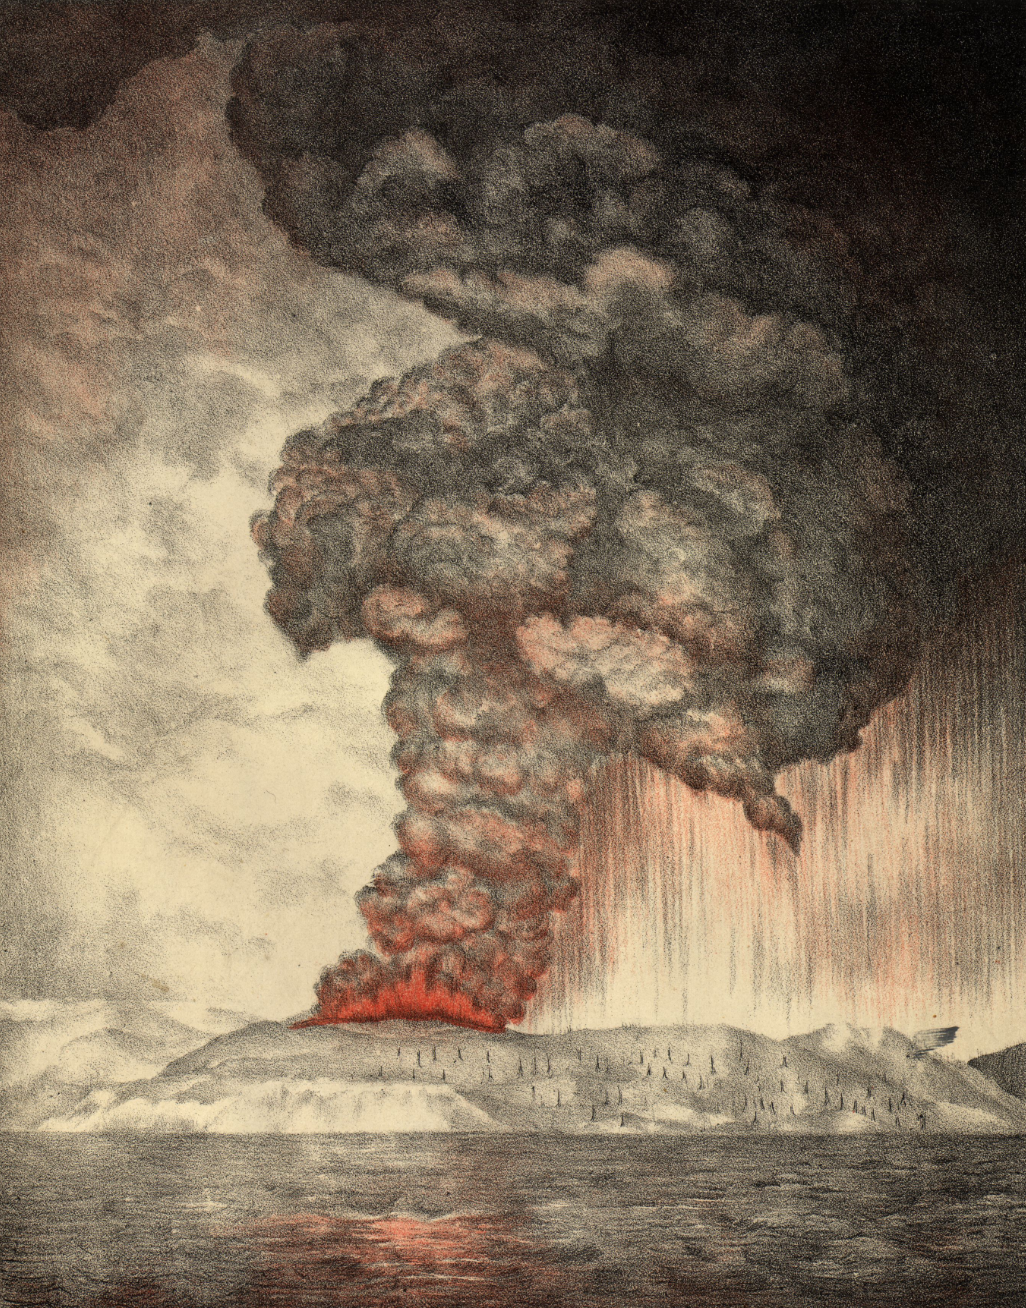 A powerful volcanic eruption of Krakatoa in 1883